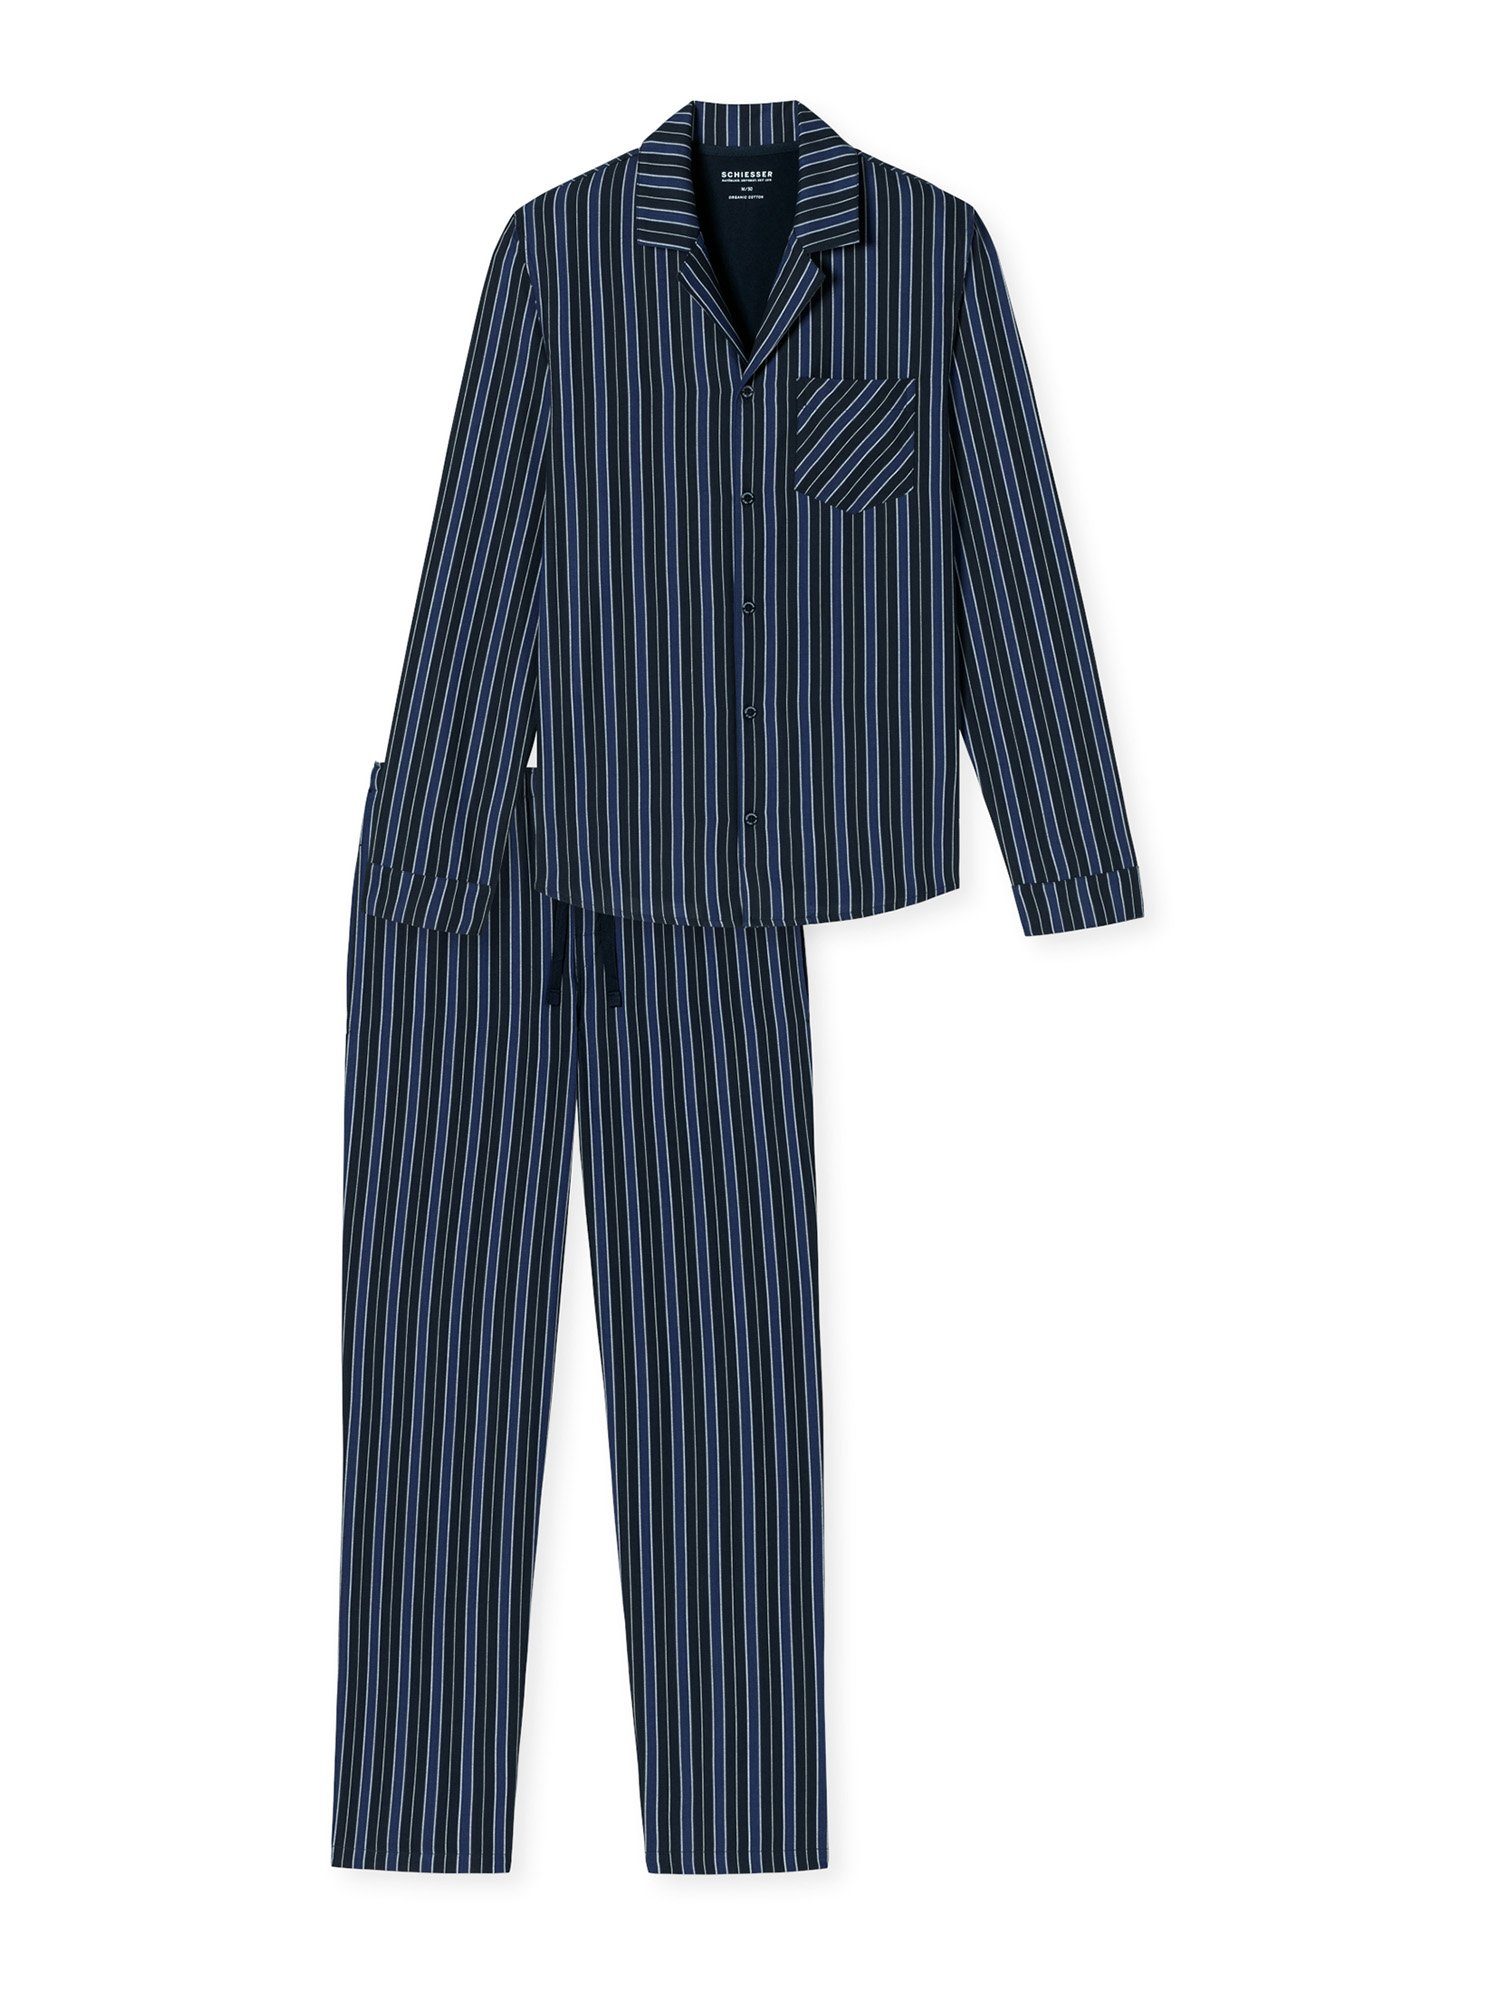 Schiesser Pyjama Selected Premium schlafanzug pyjama schlafmode